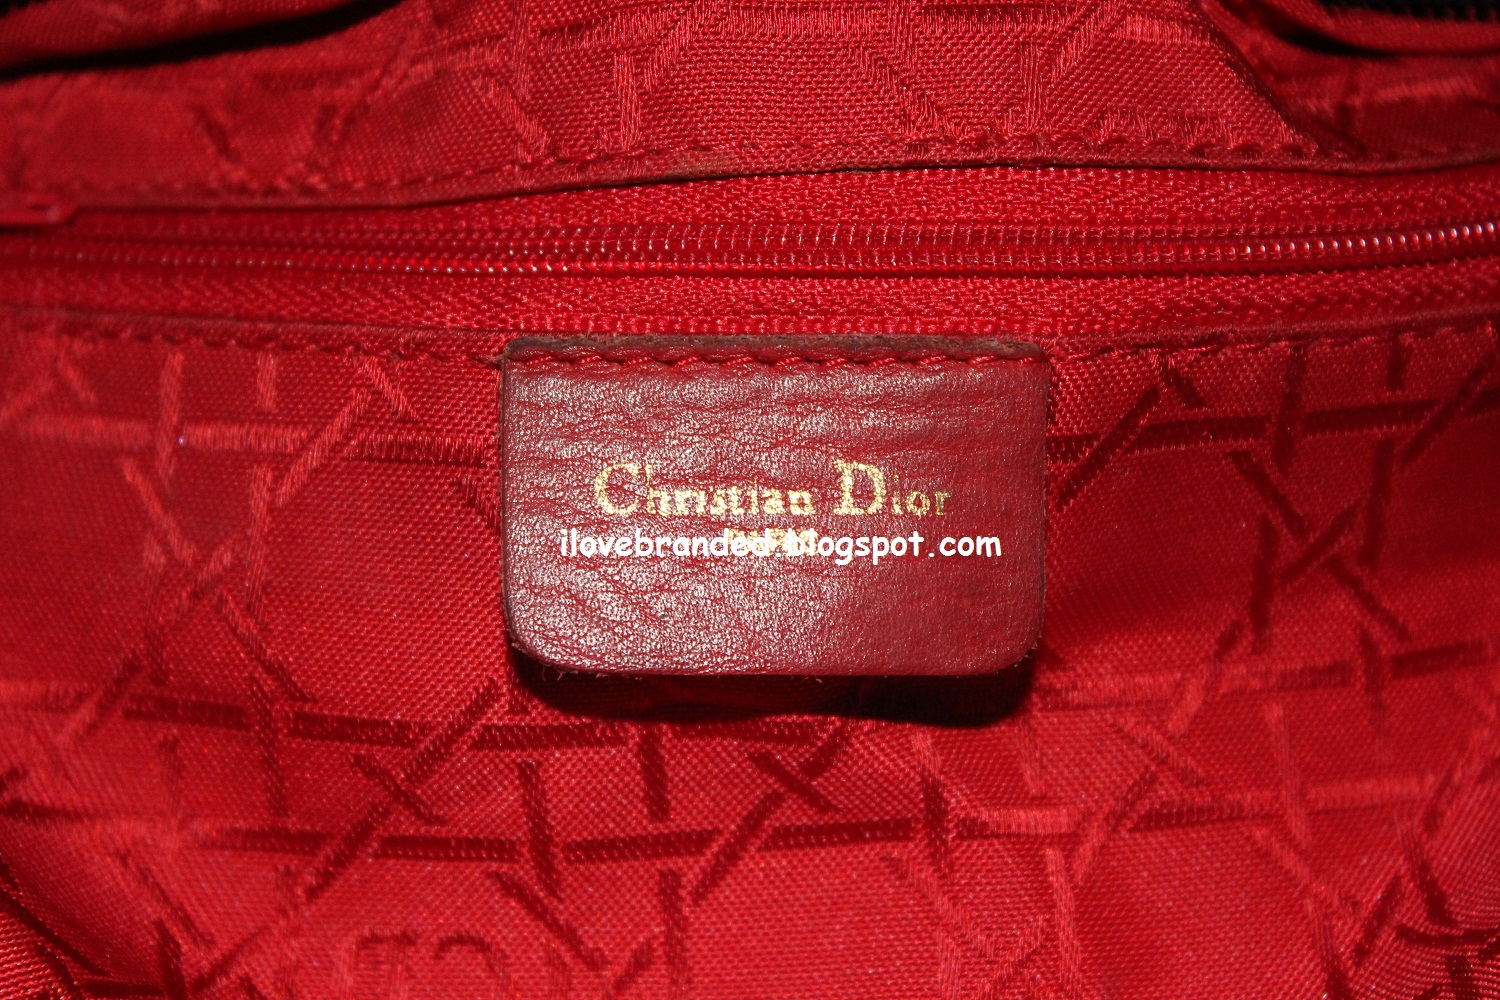 I Love Branded: Christian Dior Lady Dior Tote Bag (SOLD)